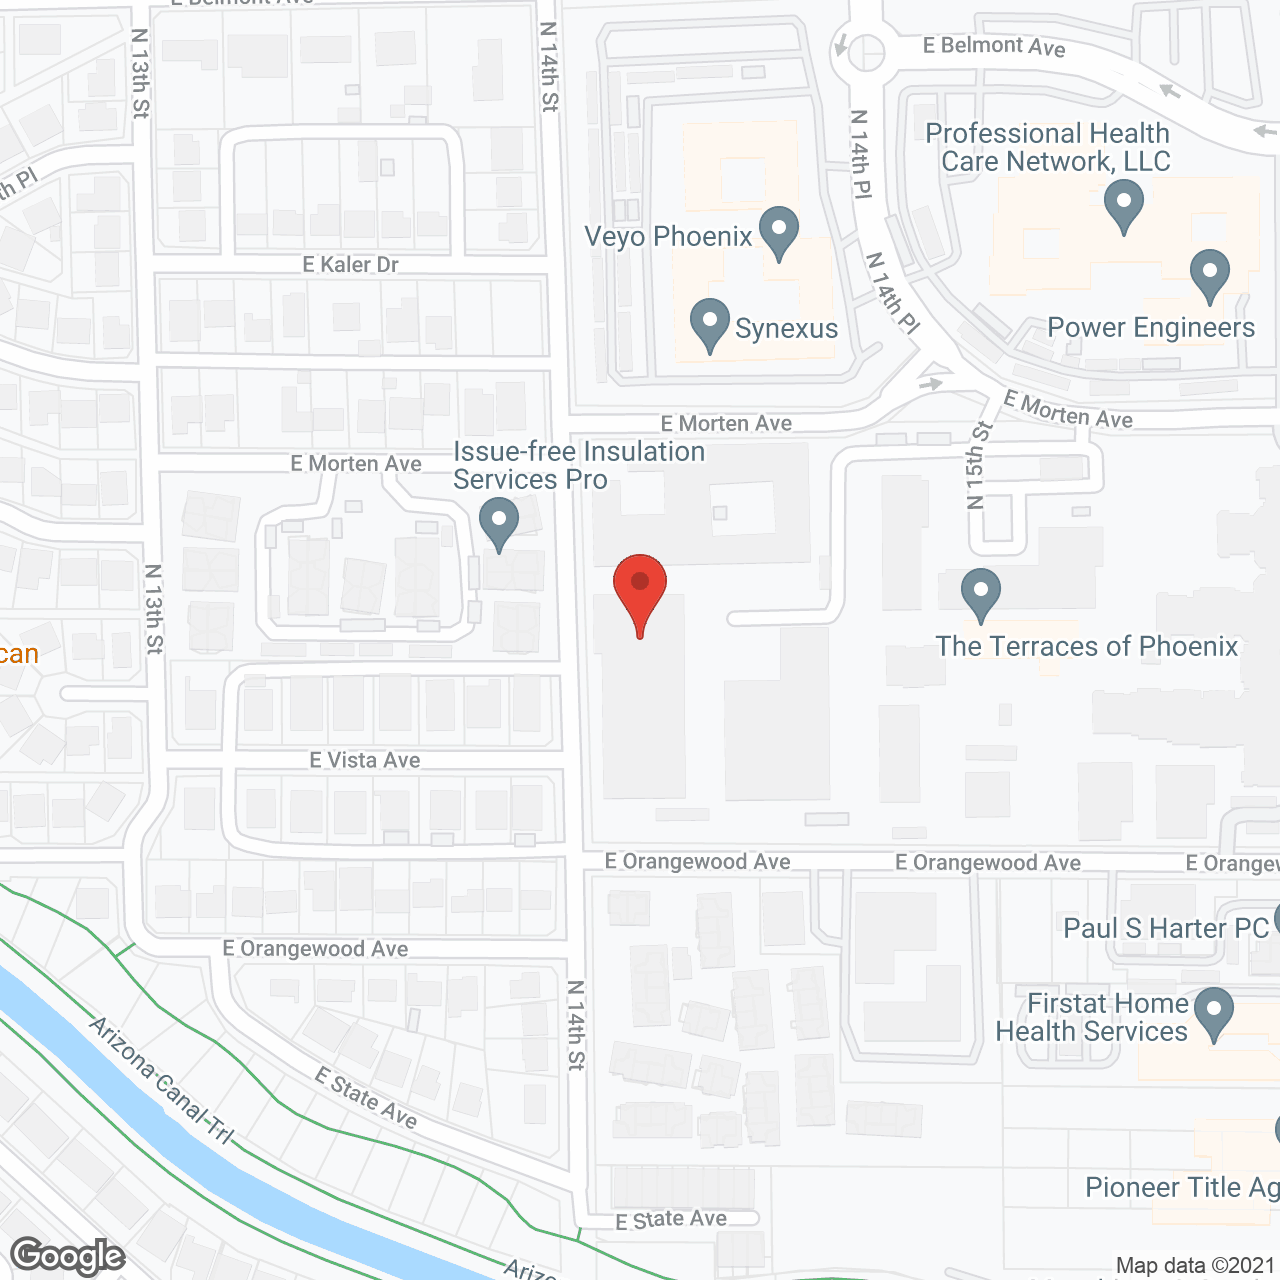 The Terraces of Phoenix in google map